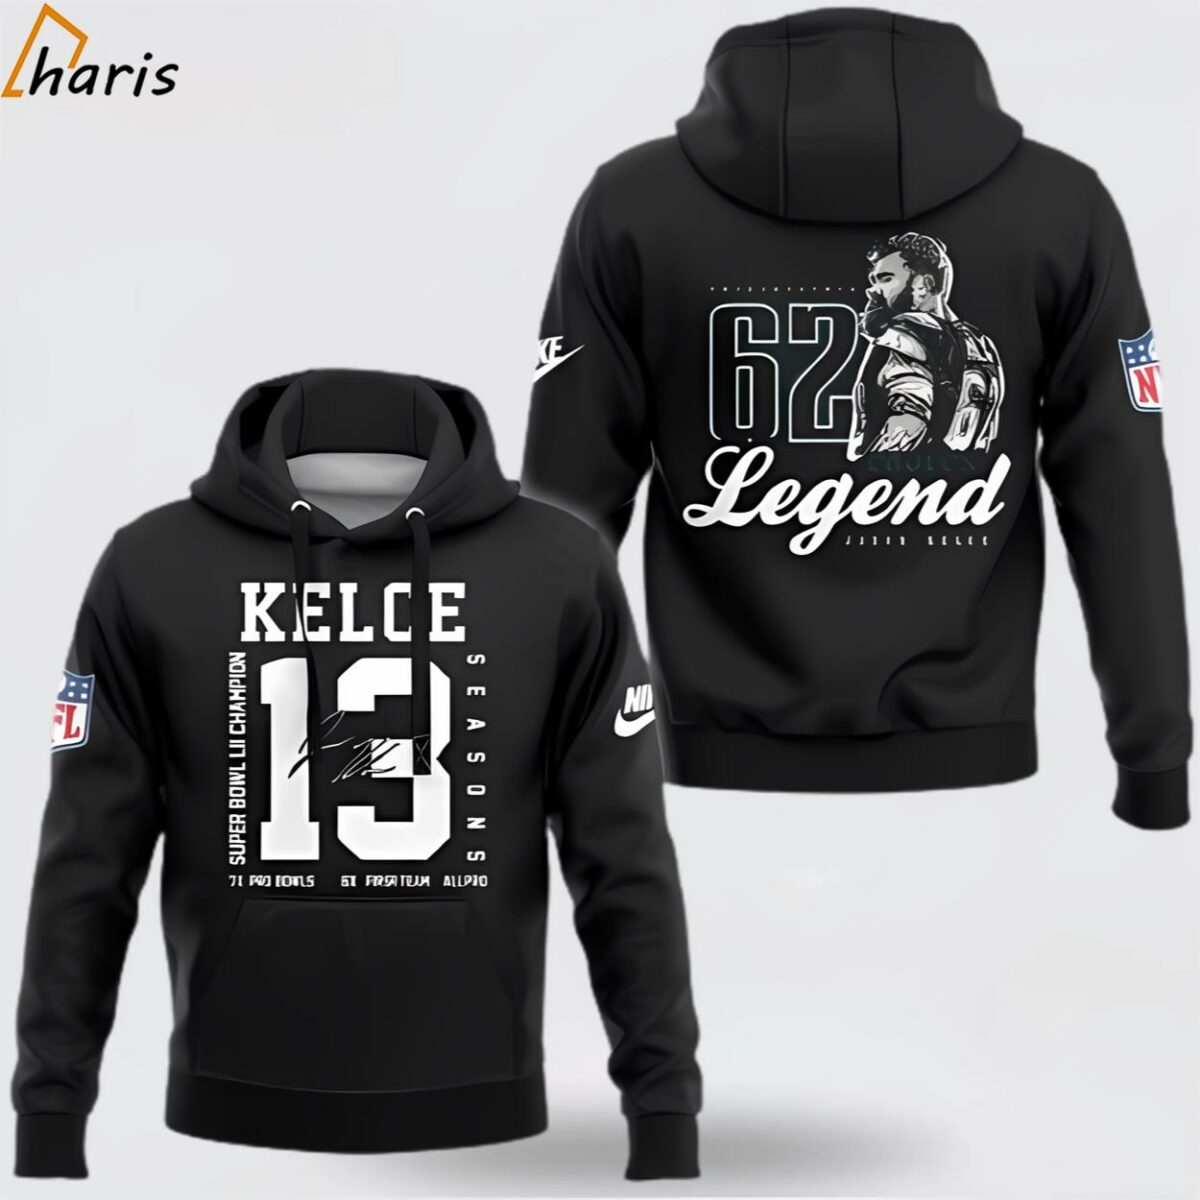 Jason Kelce Legend 13 Seasons With The Eagles Black 3D Hoodie 1 jersey